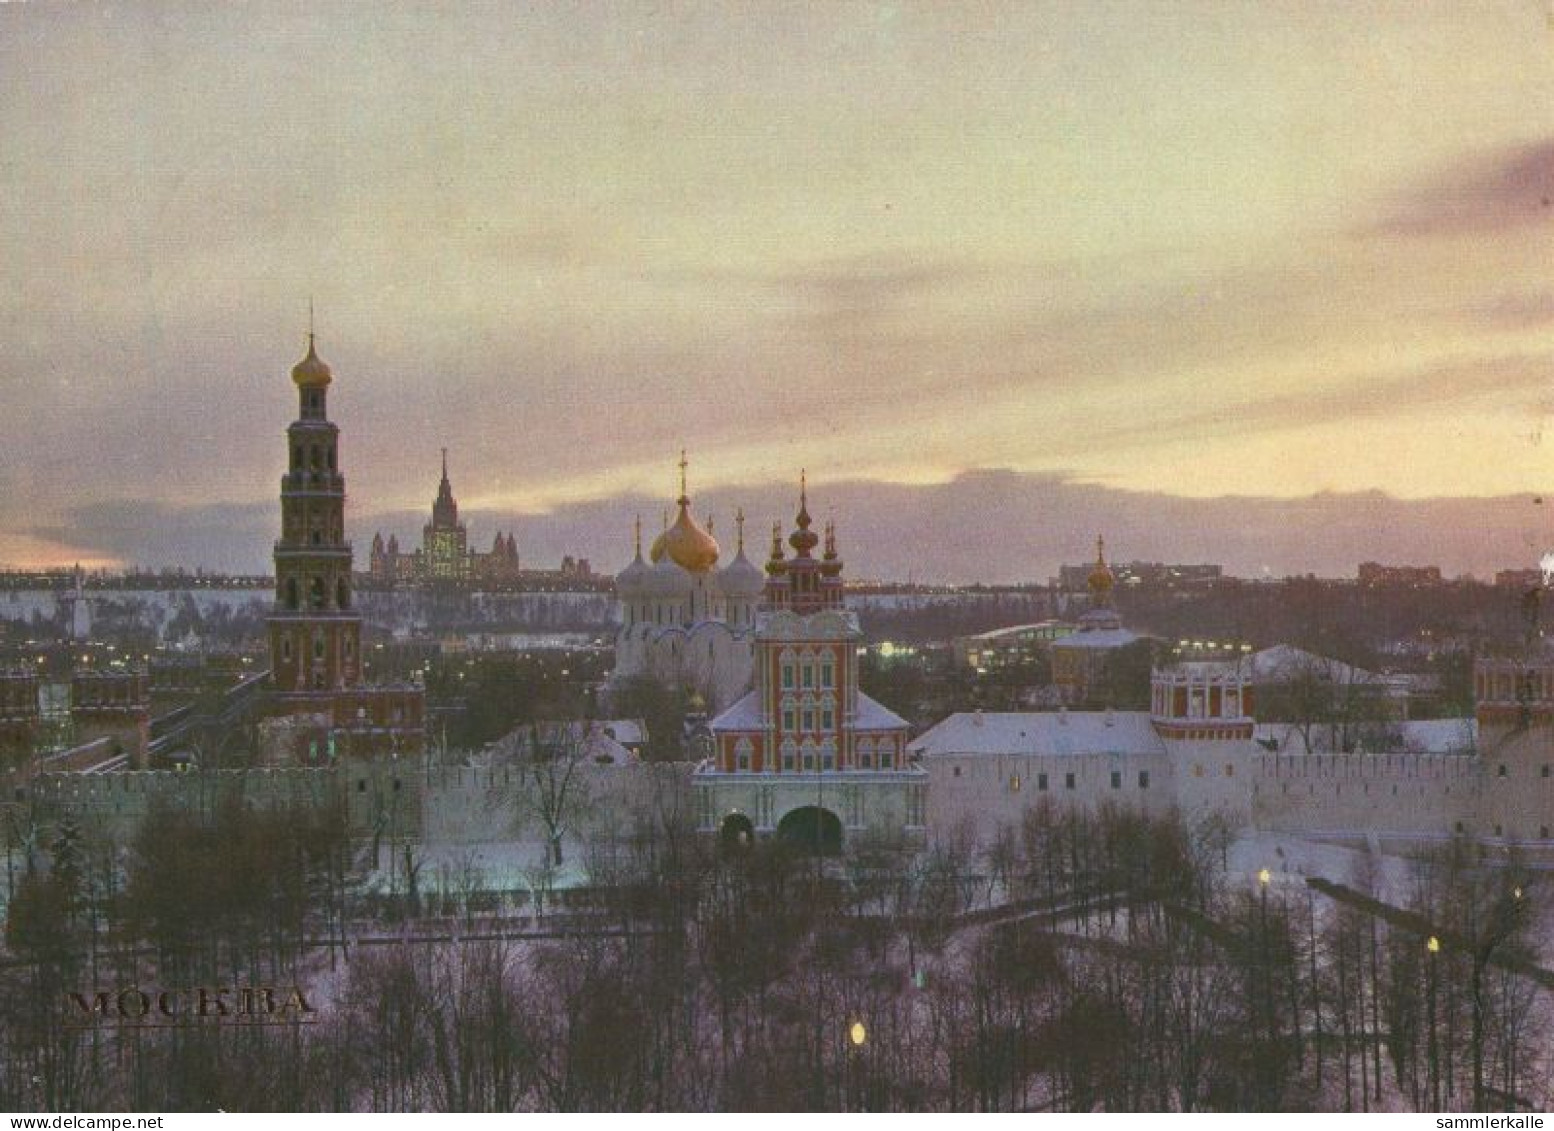 121661 - Moskau - Russland - Blick über Dächer - Russland